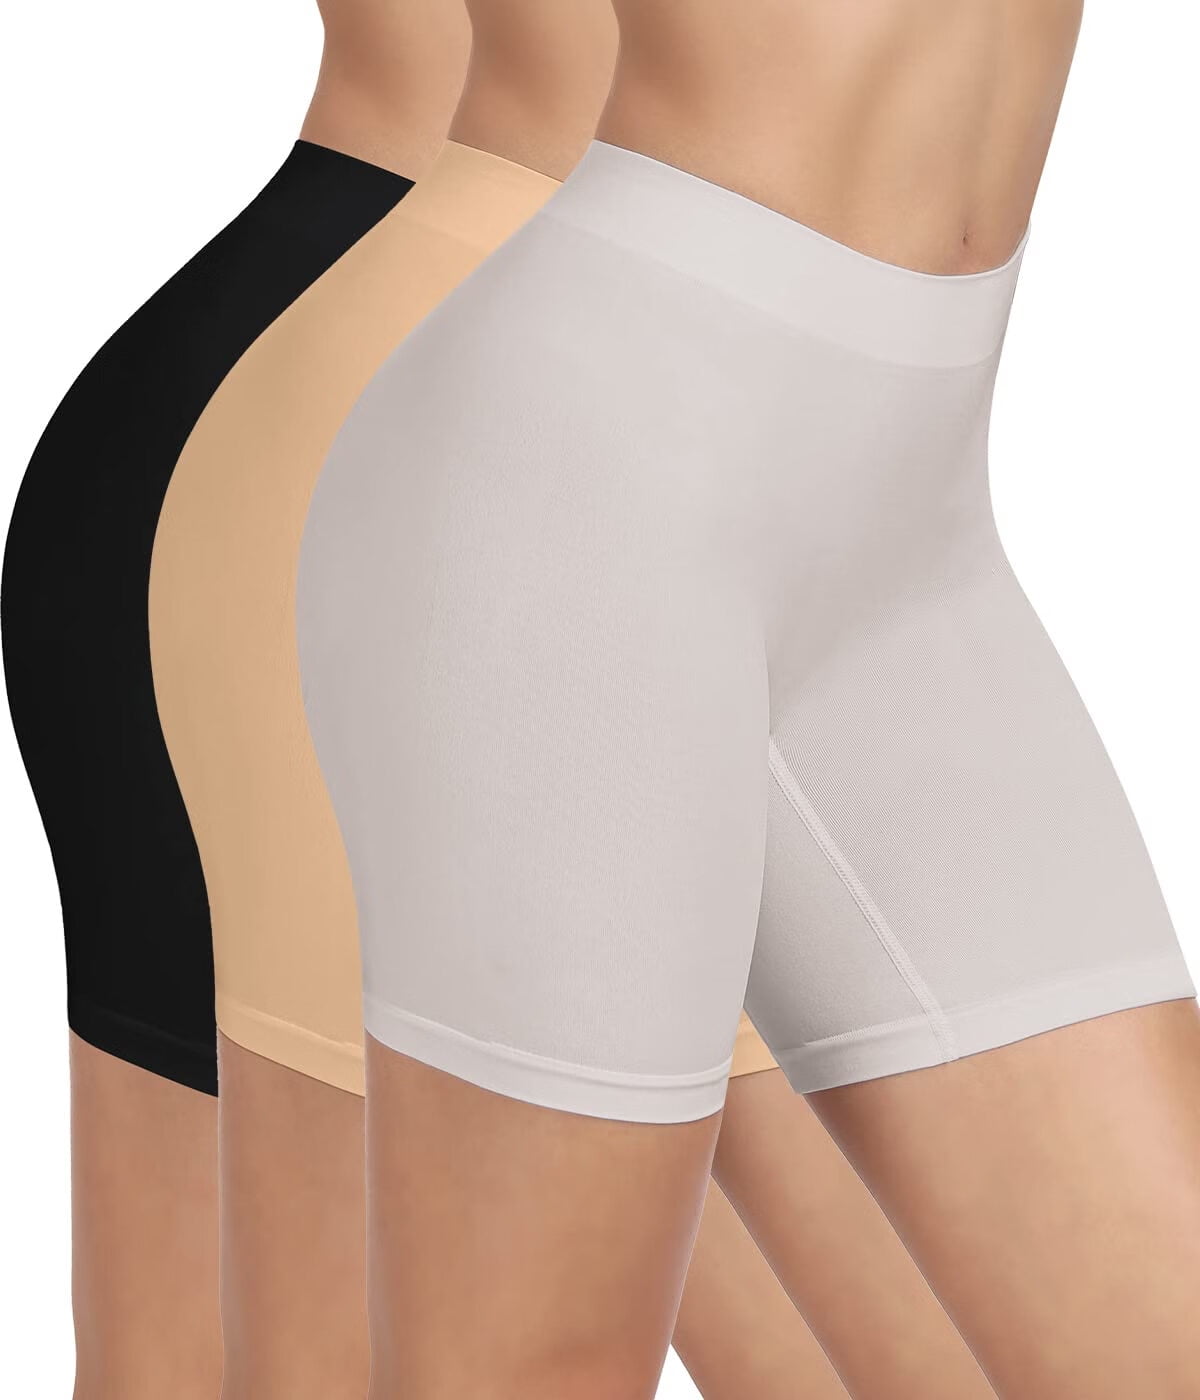 3 Pack Slip Shorts for Women Under Dress,Comfortable Seamless